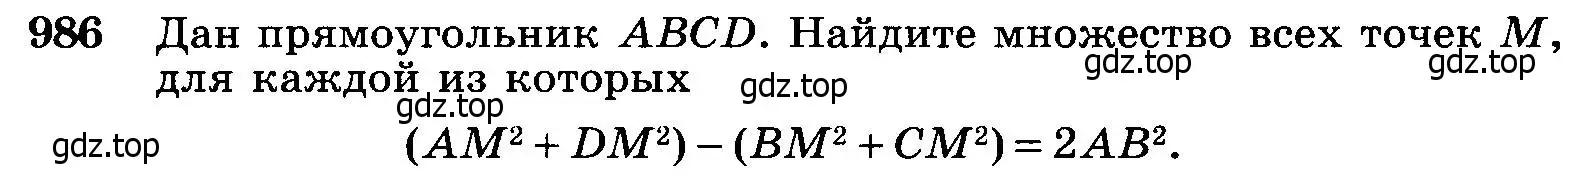 Условие номер 986 (страница 244) гдз по геометрии 7-9 класс Атанасян, Бутузов, учебник